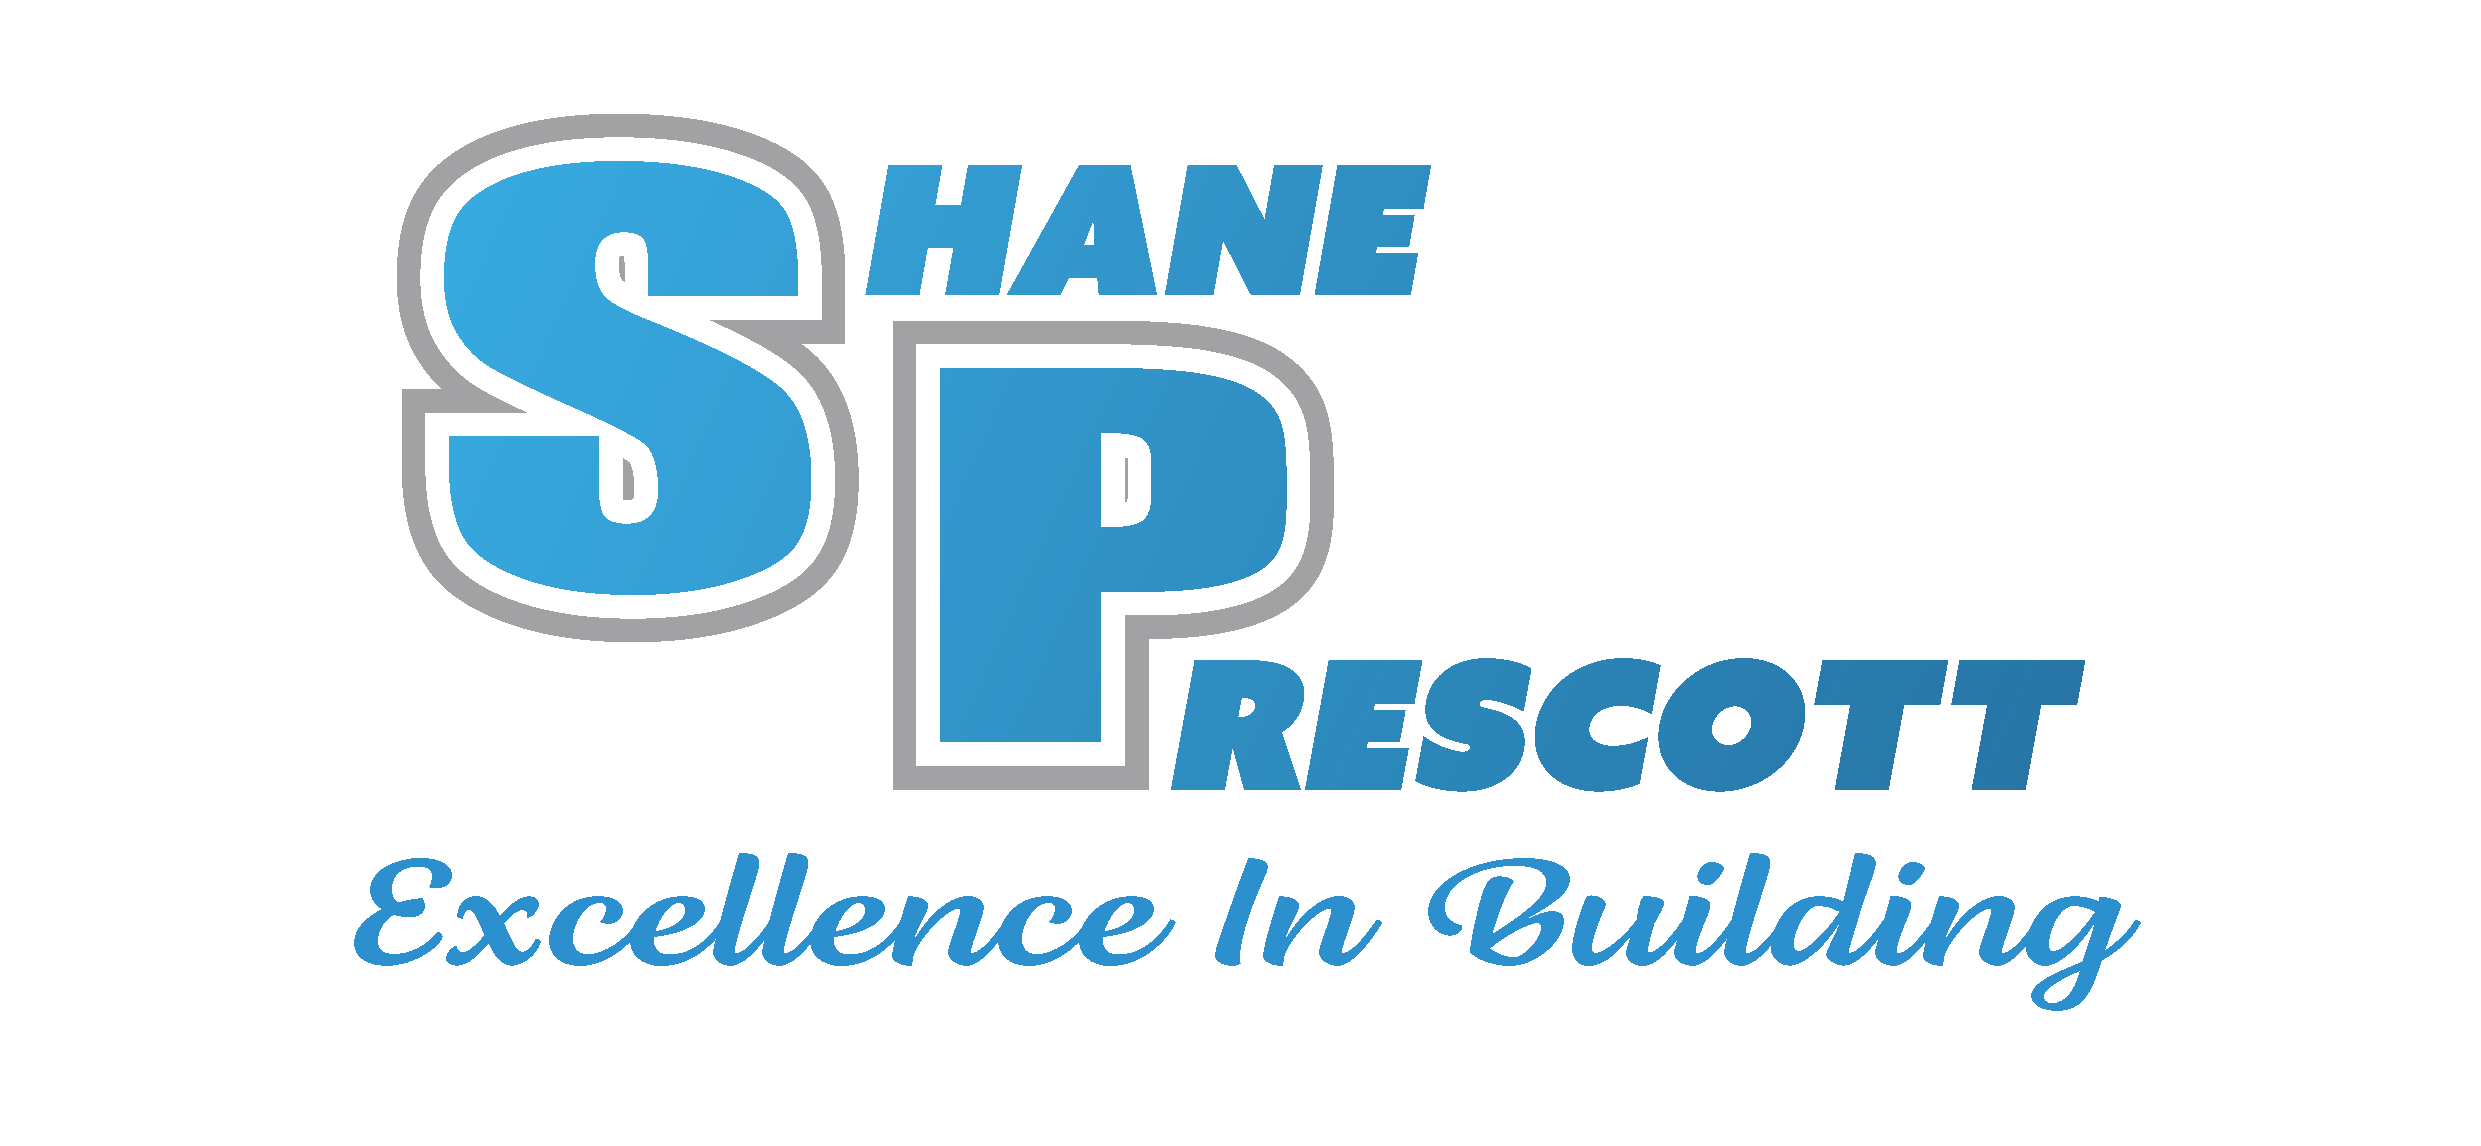 Shane Prescott logo